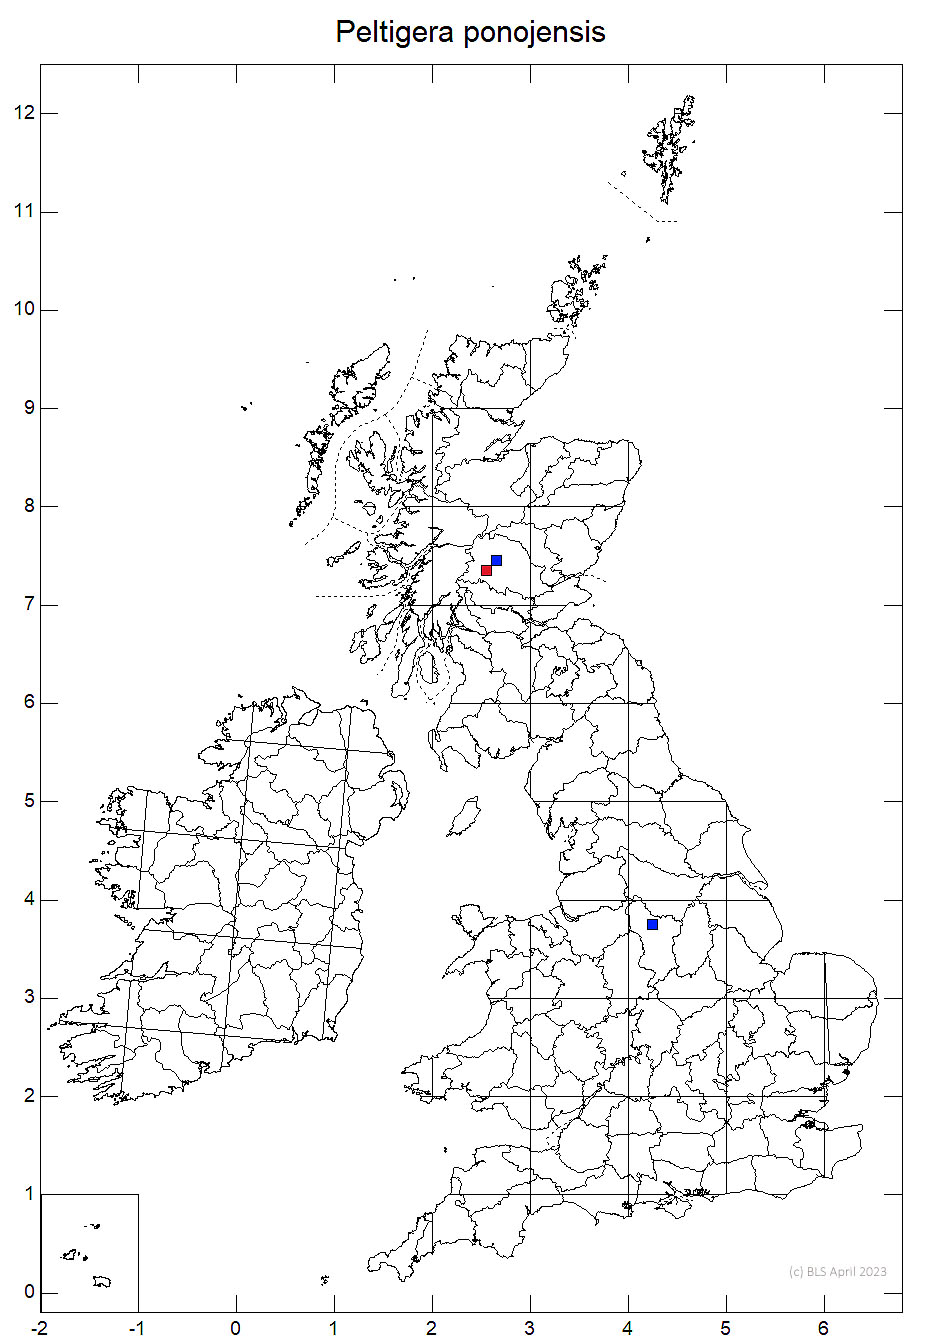 Peltigera ponojensis 10km sq distribution map